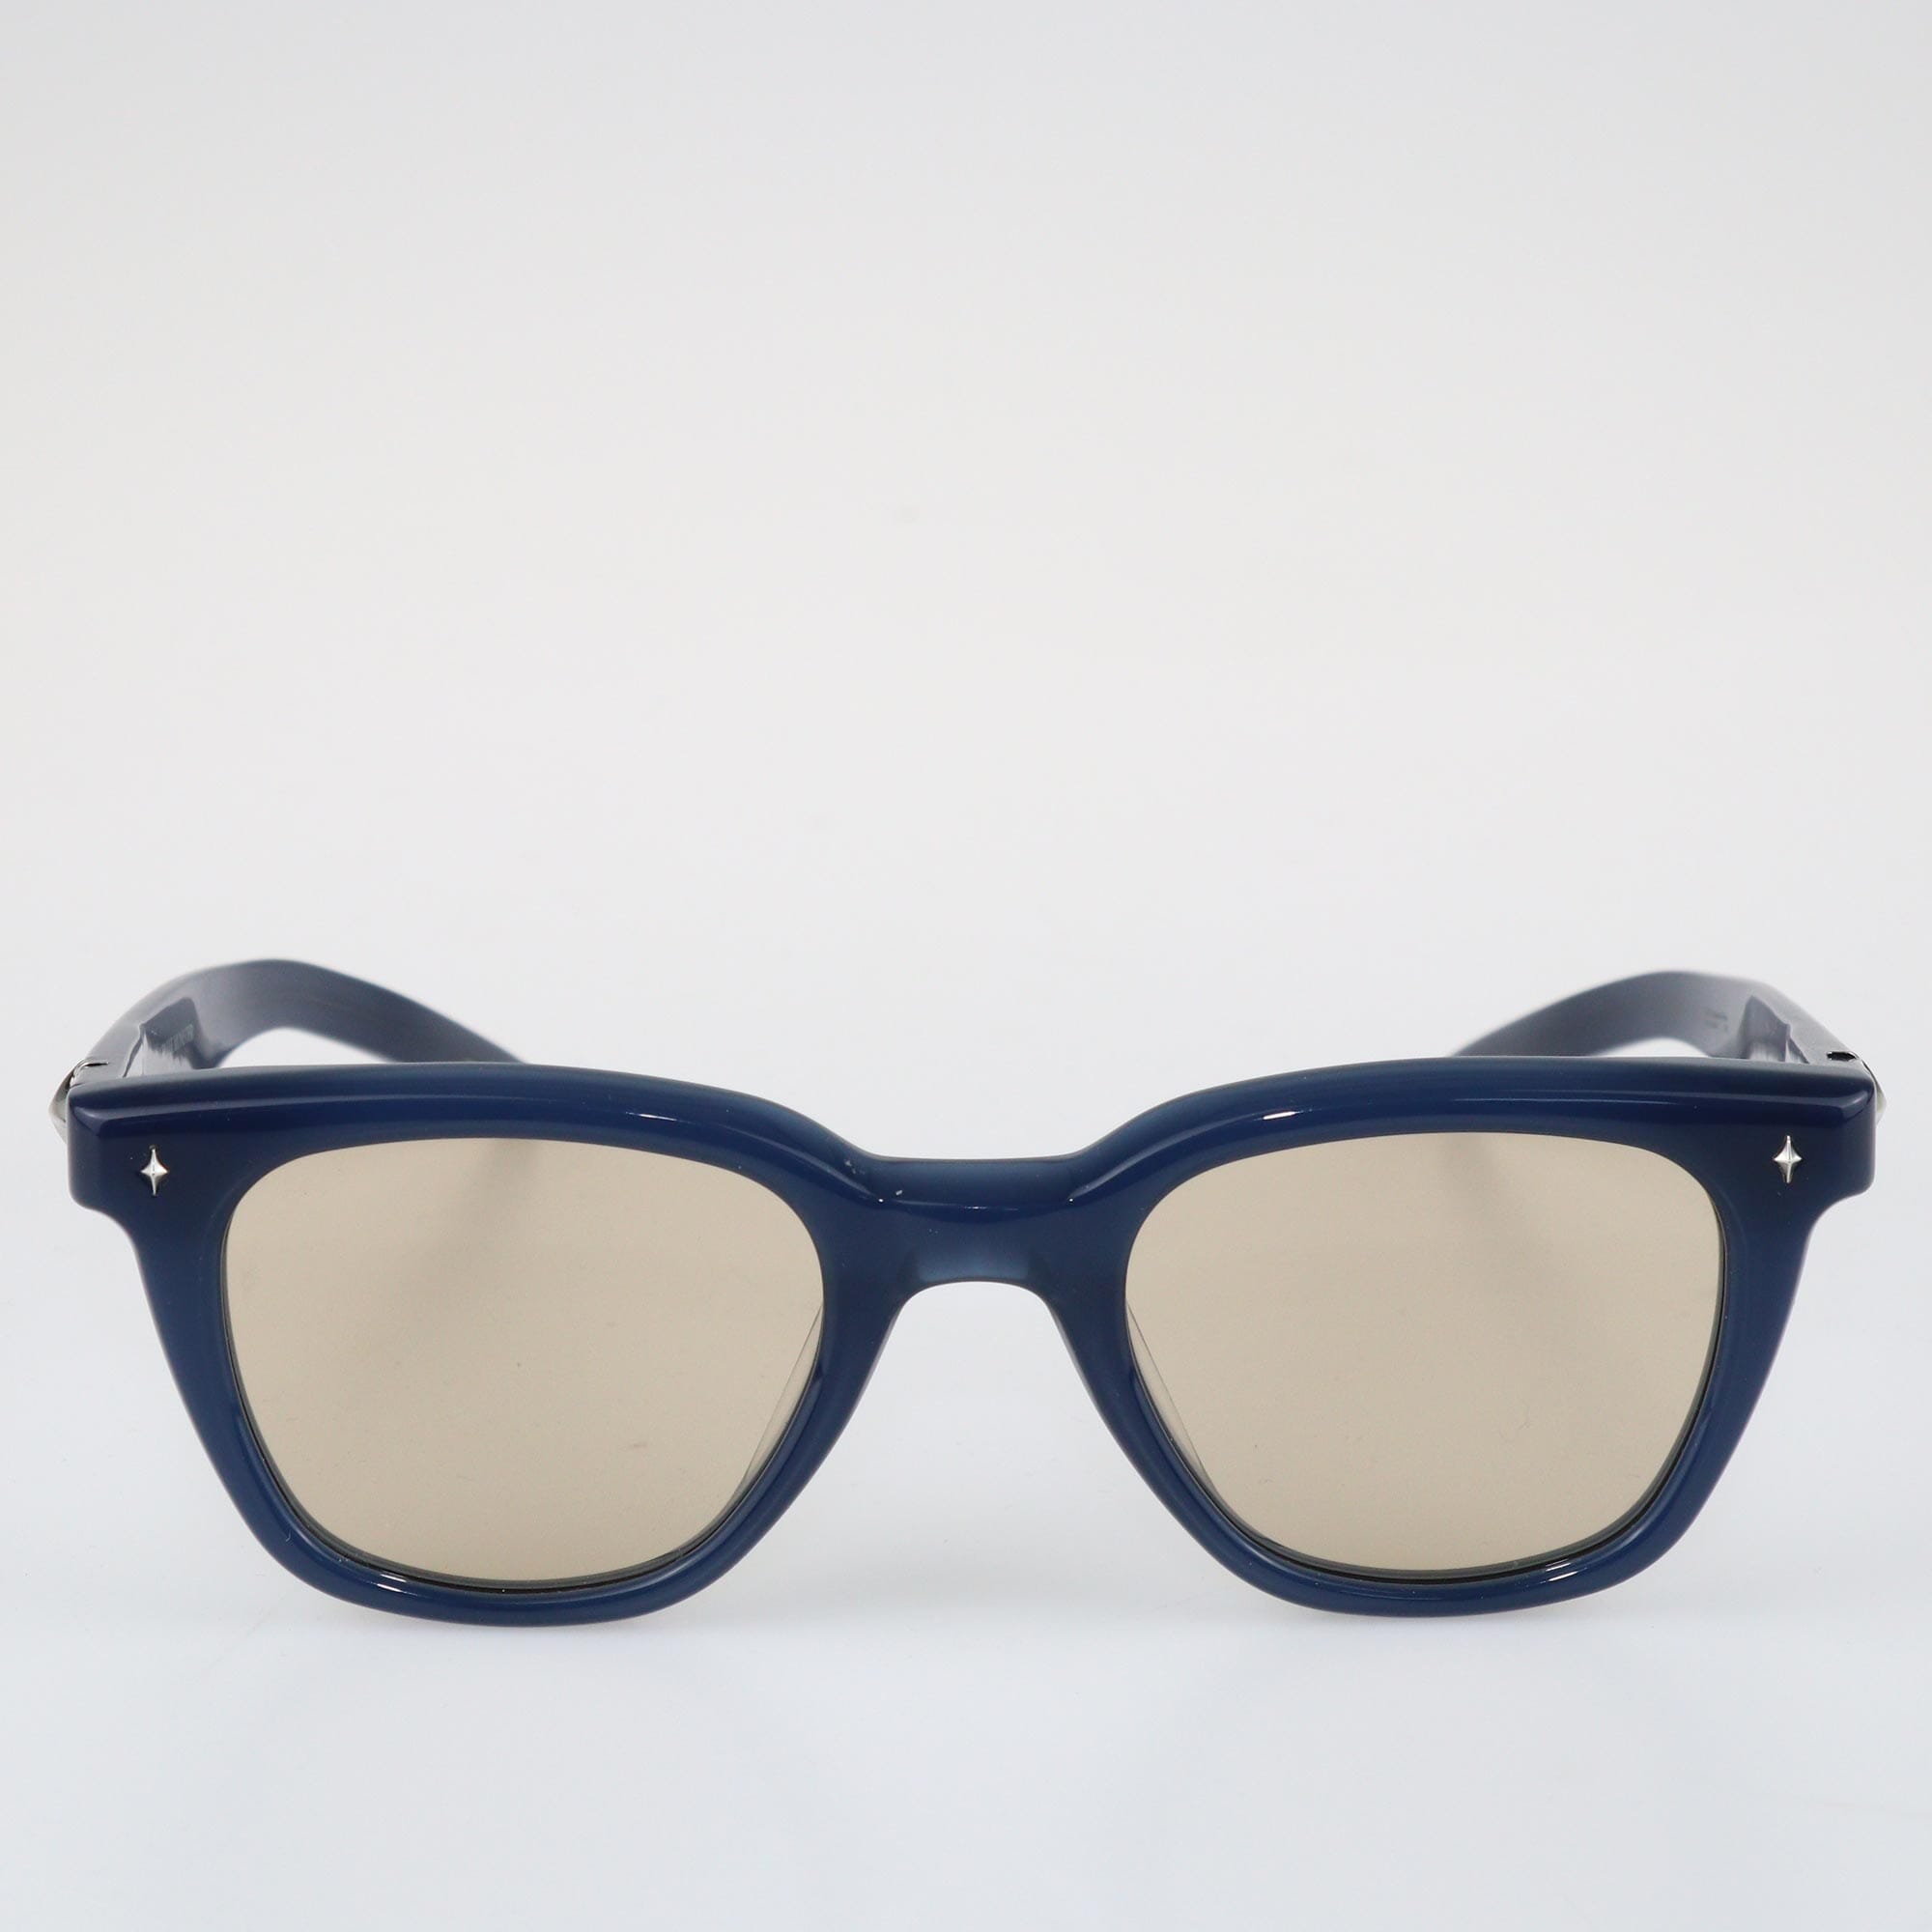 Blue/Brown Gauss NC3 Square Frame Sunglasses Sunglasses Gentle Monster 